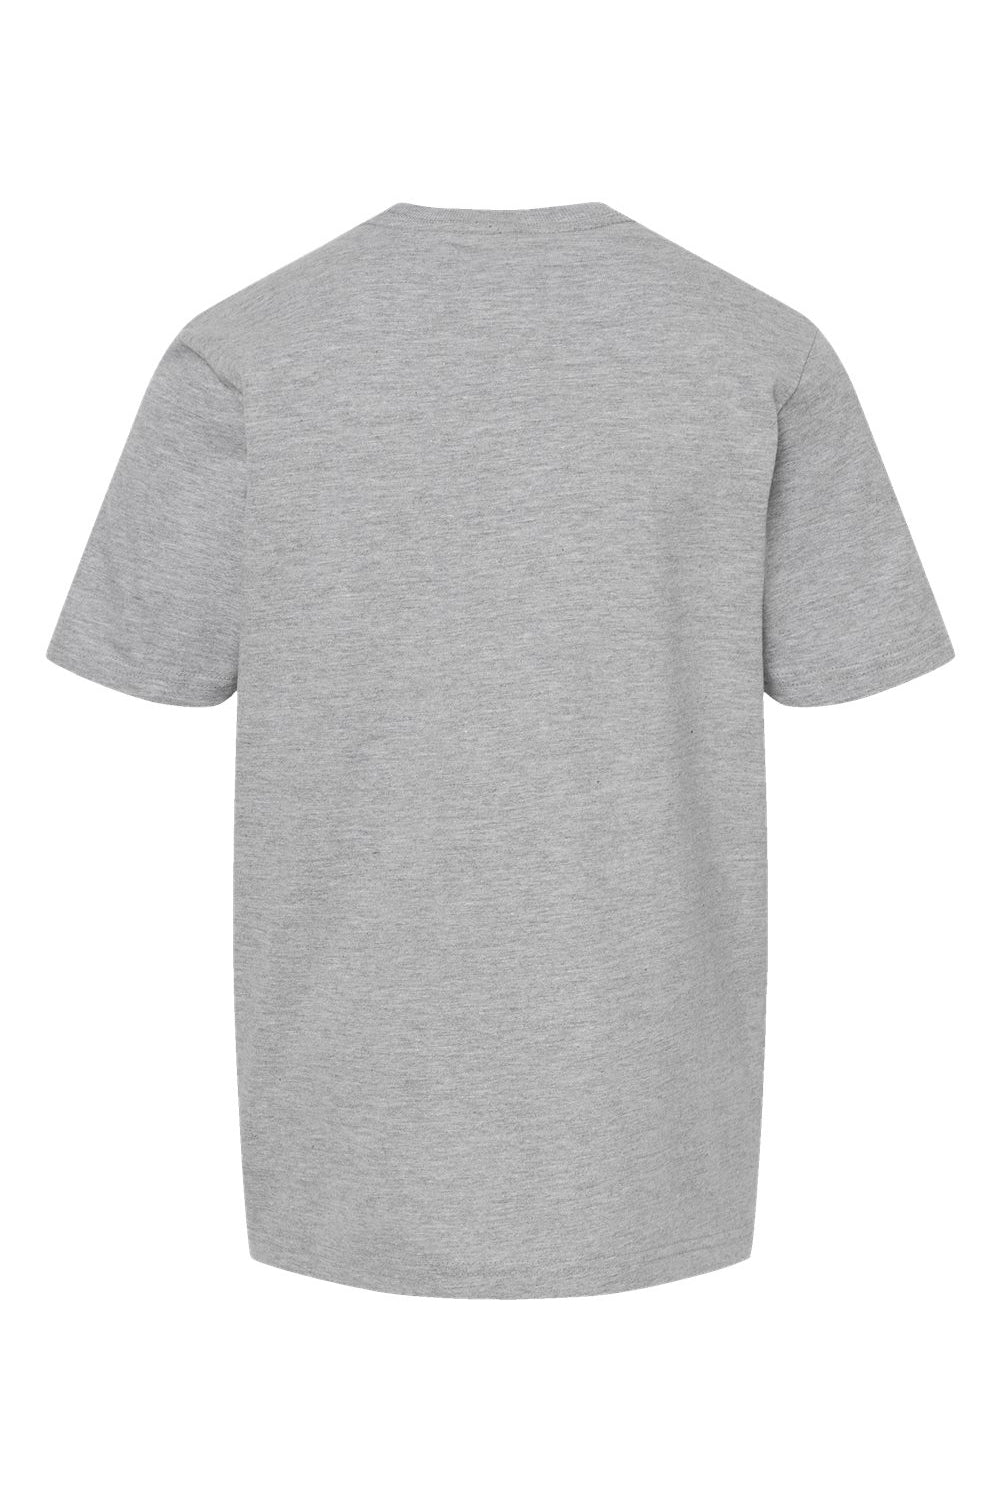 Tultex 295 Youth Jersey Short Sleeve Crewneck T-Shirt Heather Grey Flat Back